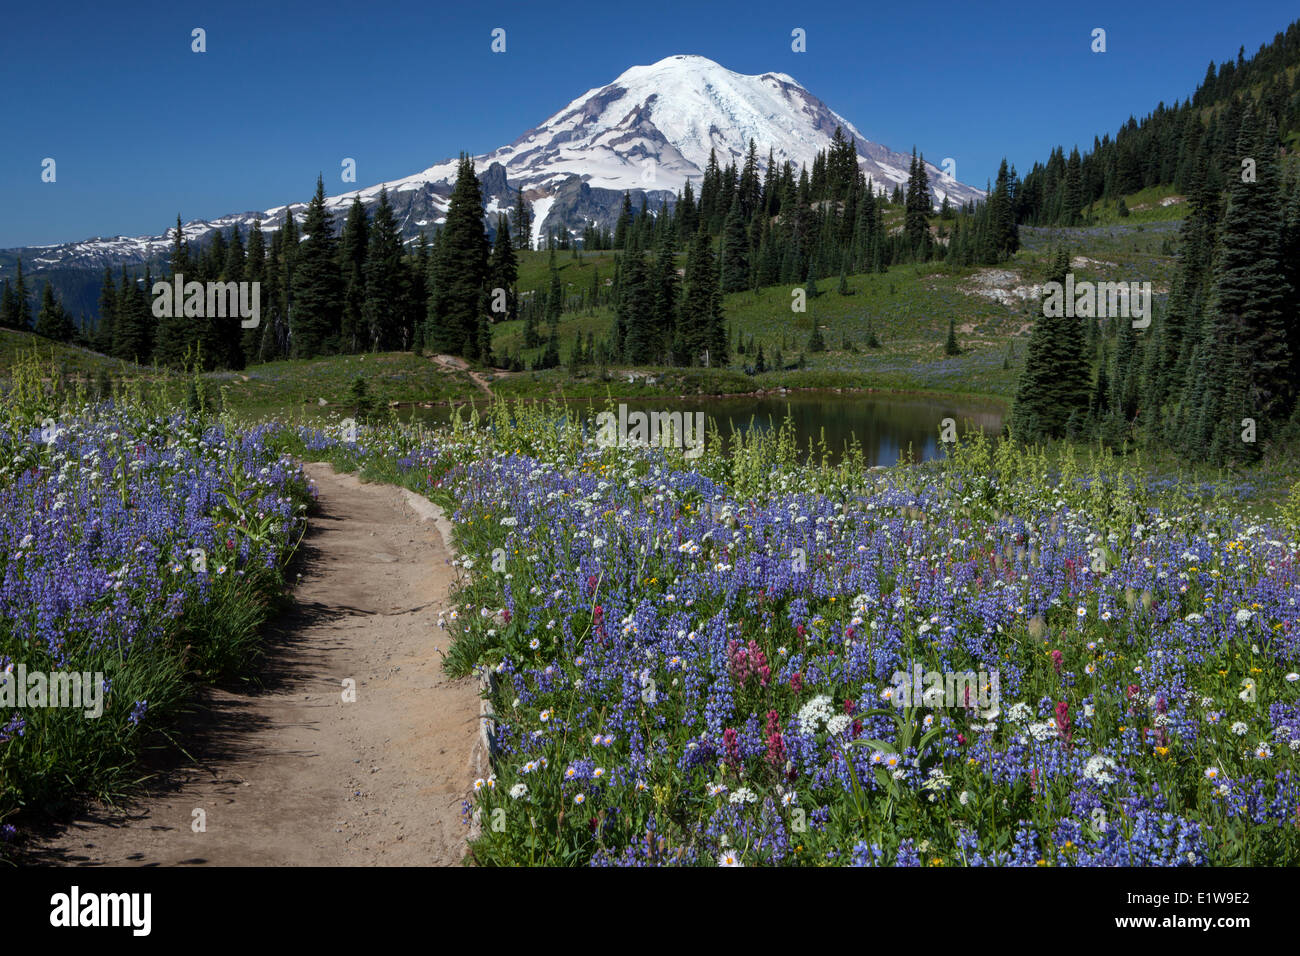 Mount Rainier and Wildflowers, Naches Peak Loop Trail, Mount Rainier National Park, Washington State, United States of America Stock Photo